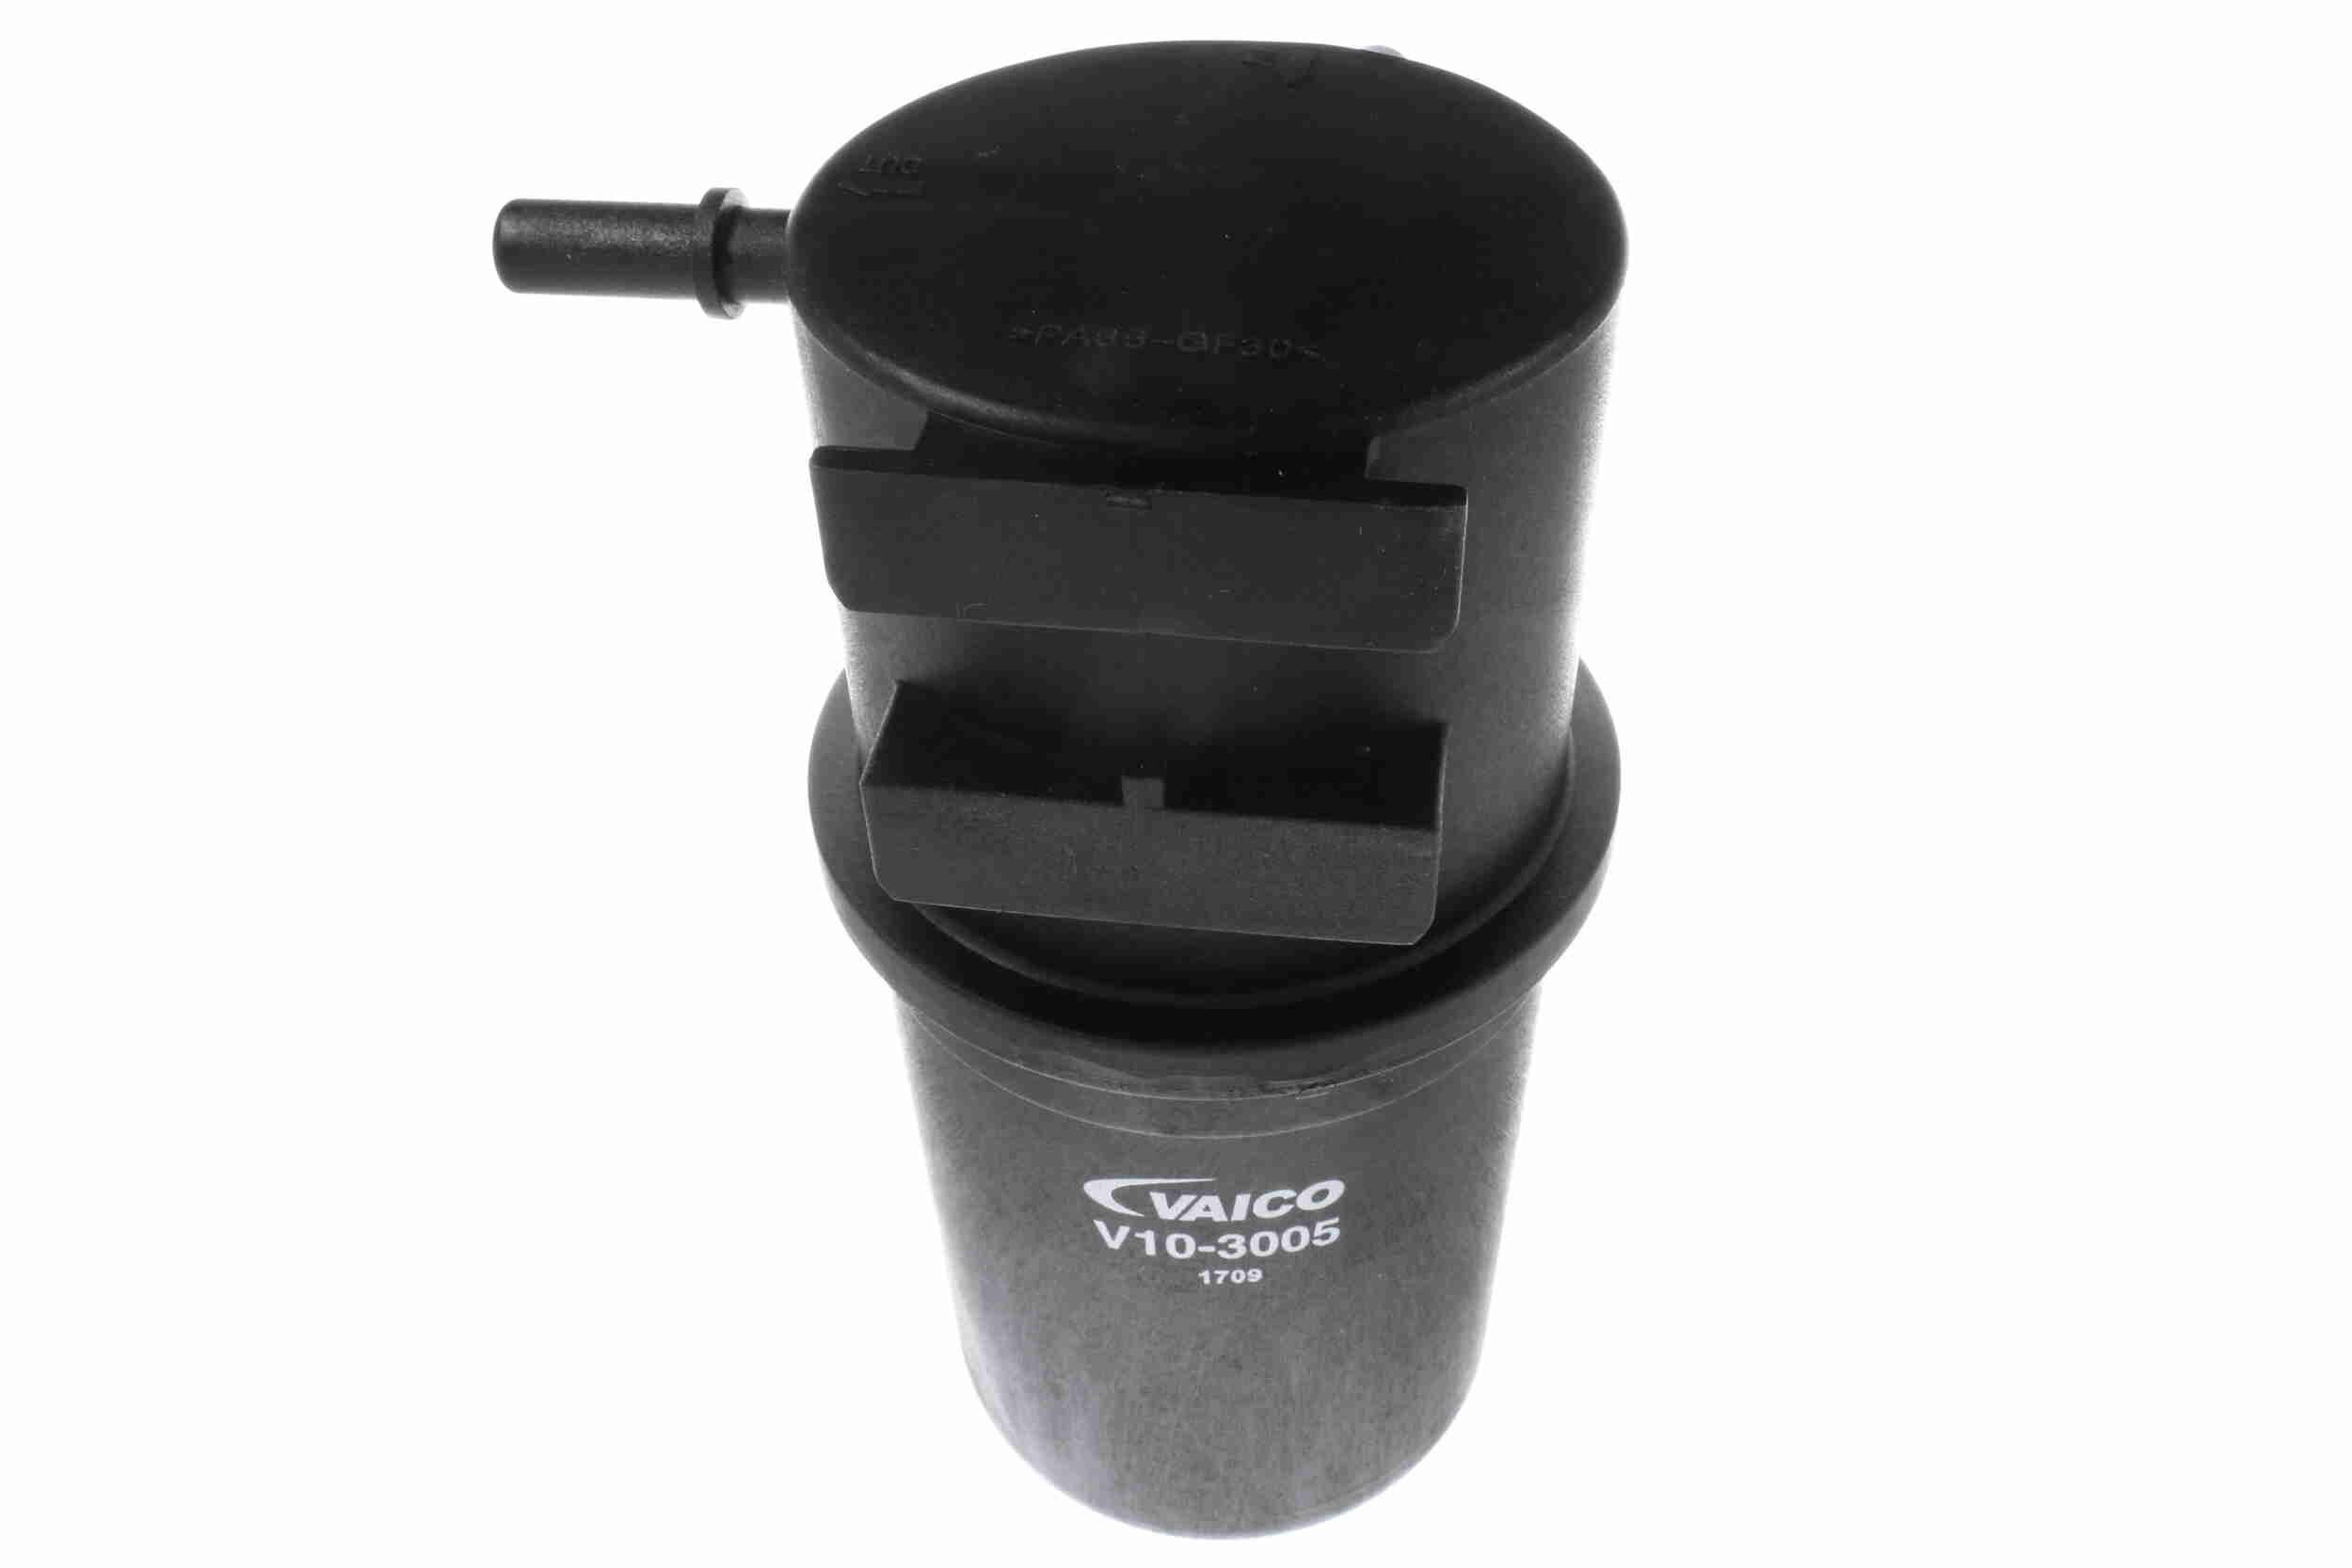 VAICO V10-3005 Fuel filter In-Line Filter, Diesel, Original VAICO Quality